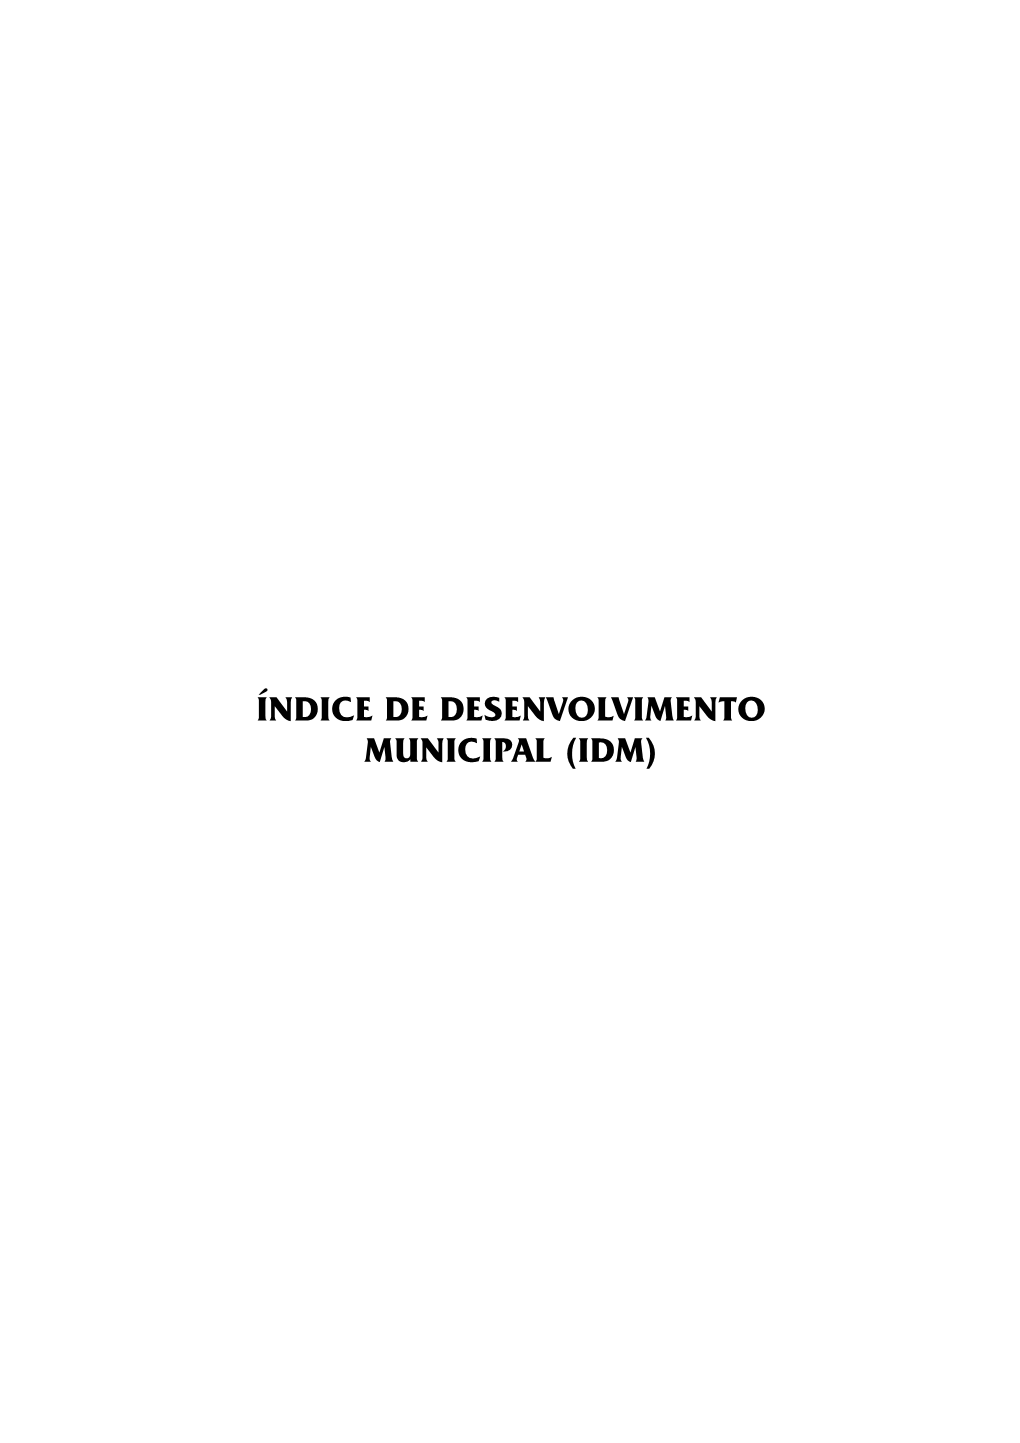 Índice De Desenvolvimento Municipal (IDM) Ceará – 1999